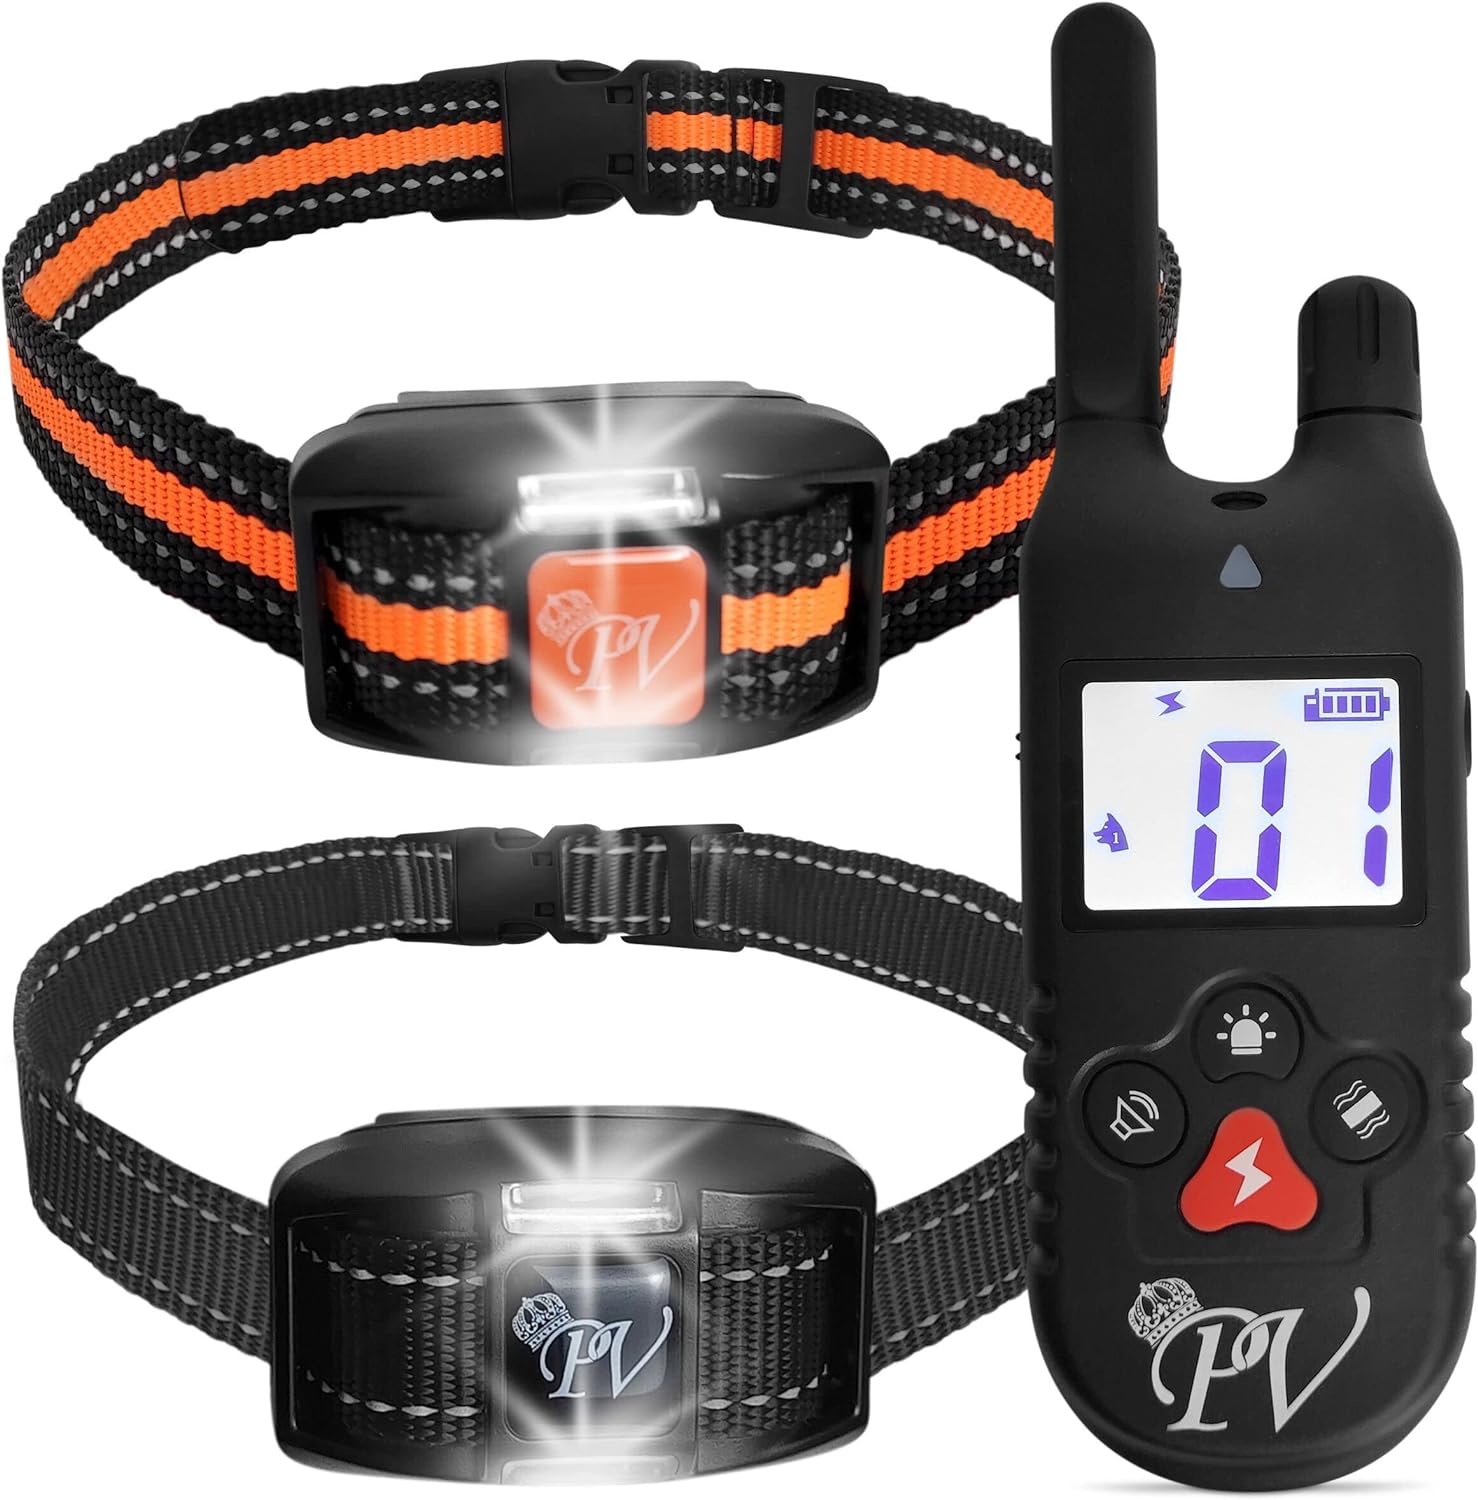 Dog Training Collar 3000 ft Control Range, Waterproof, Remote, LED Light, Beep, Shock, Vibration and Keypad Lock Mode